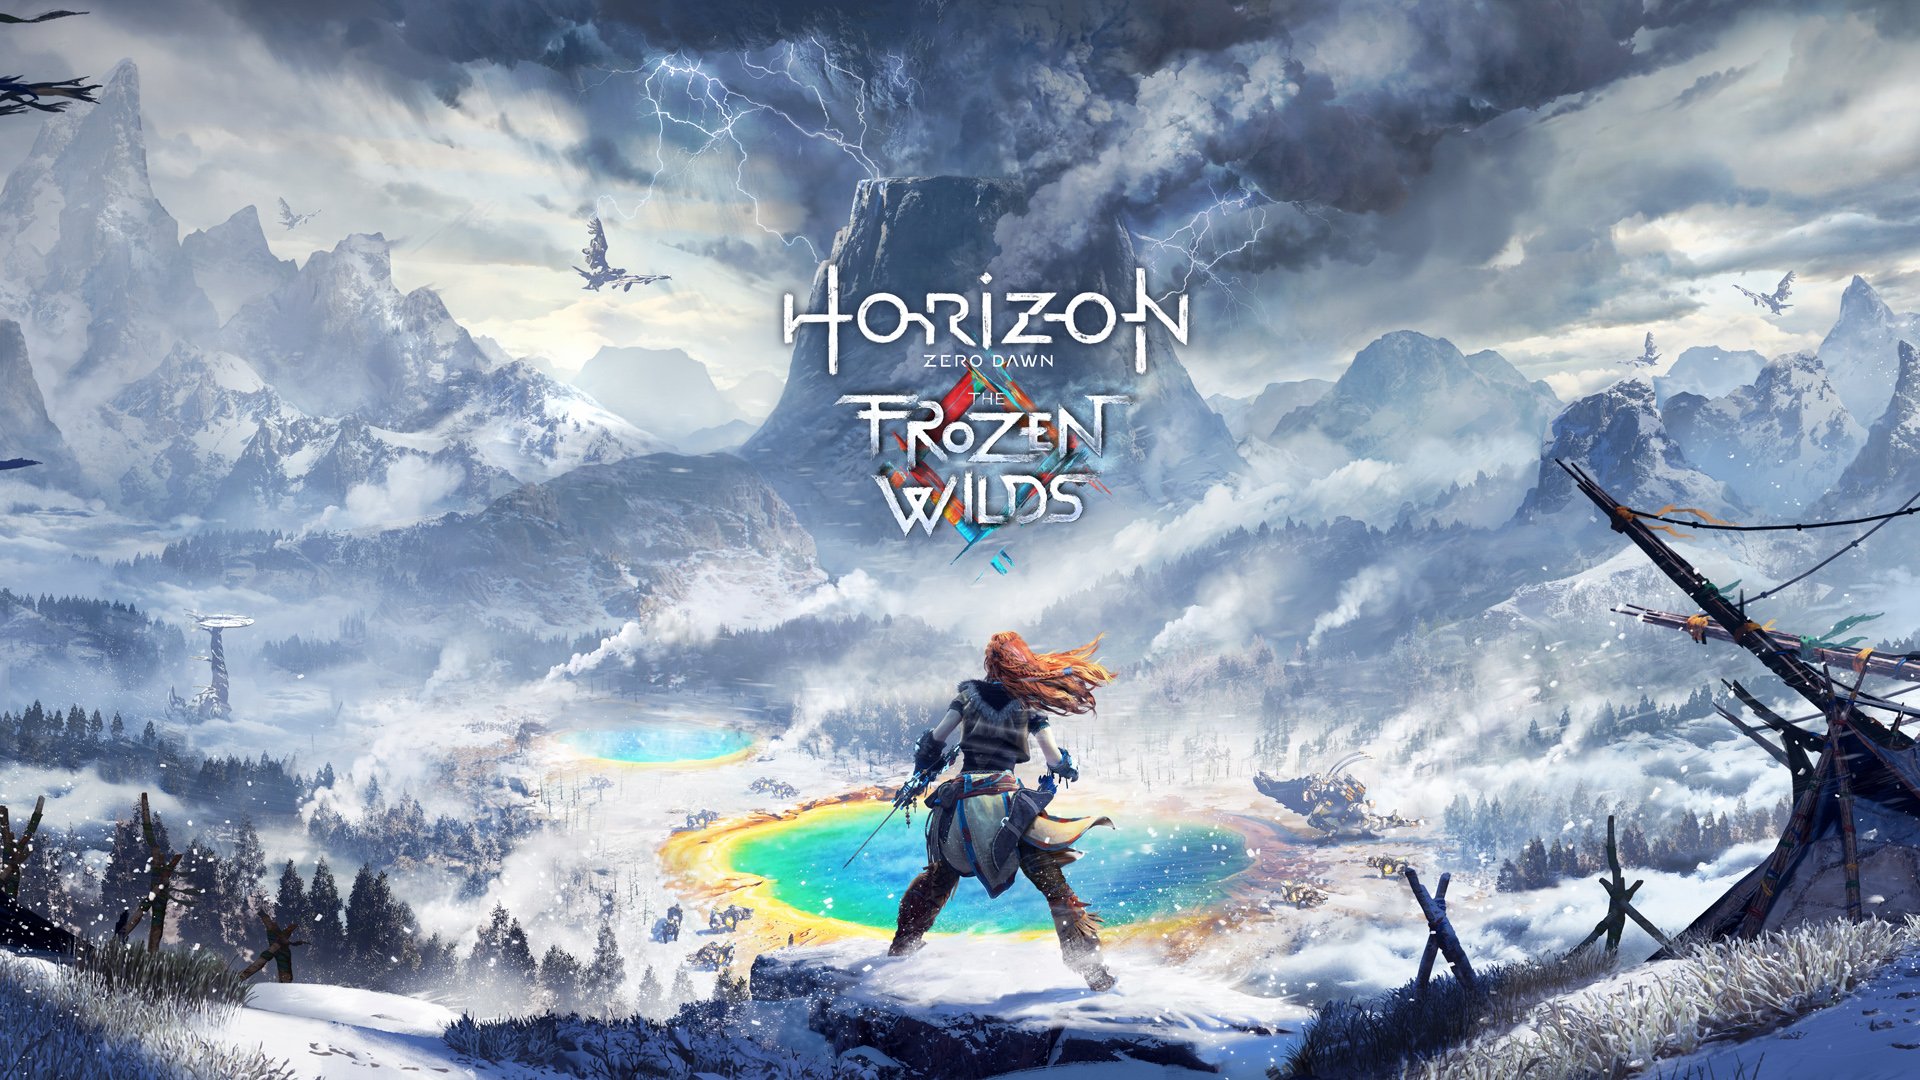 Revisión de complementos The Frozen Wilds para el juego Horizon Zero Dawn